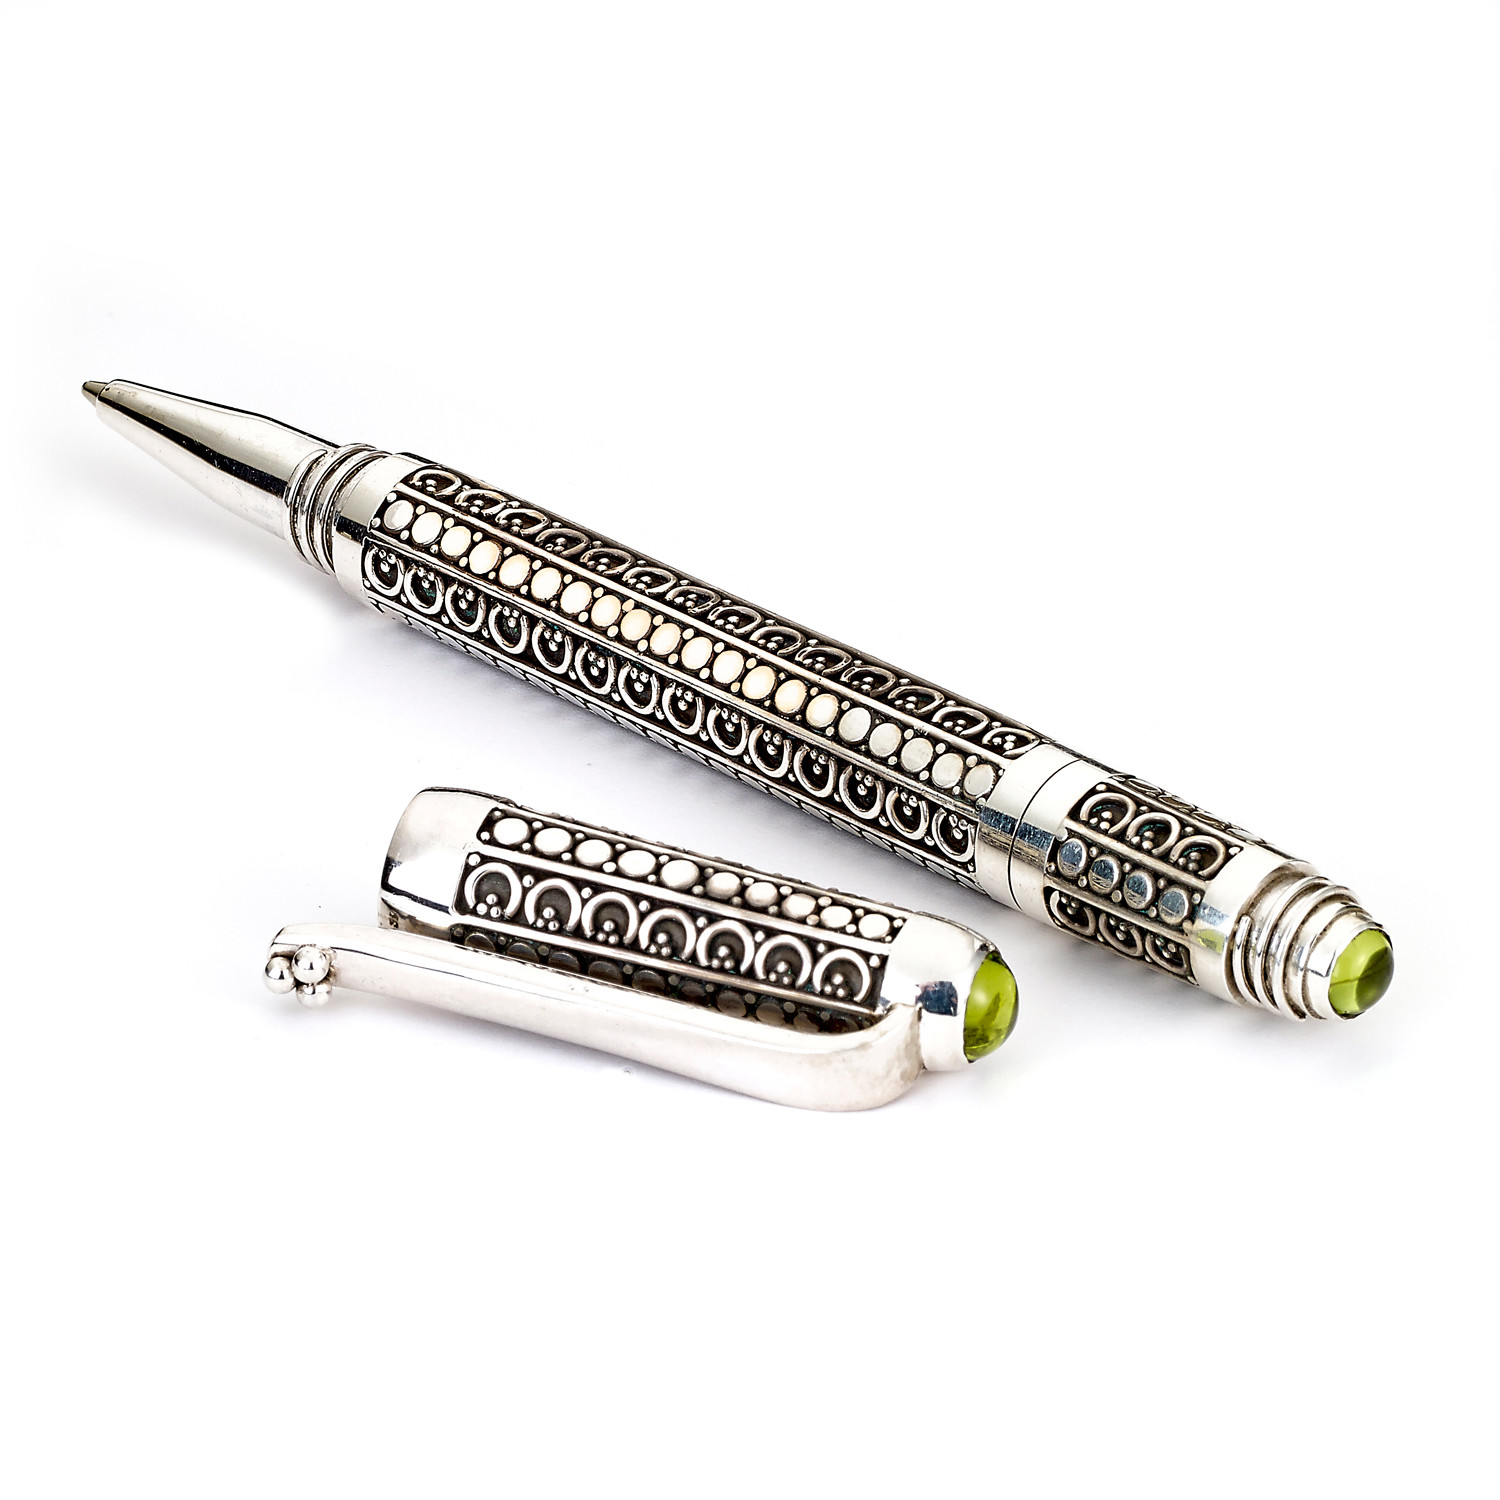 Handmade Silver Pen from Bali - Samuel B. Sterling Pen